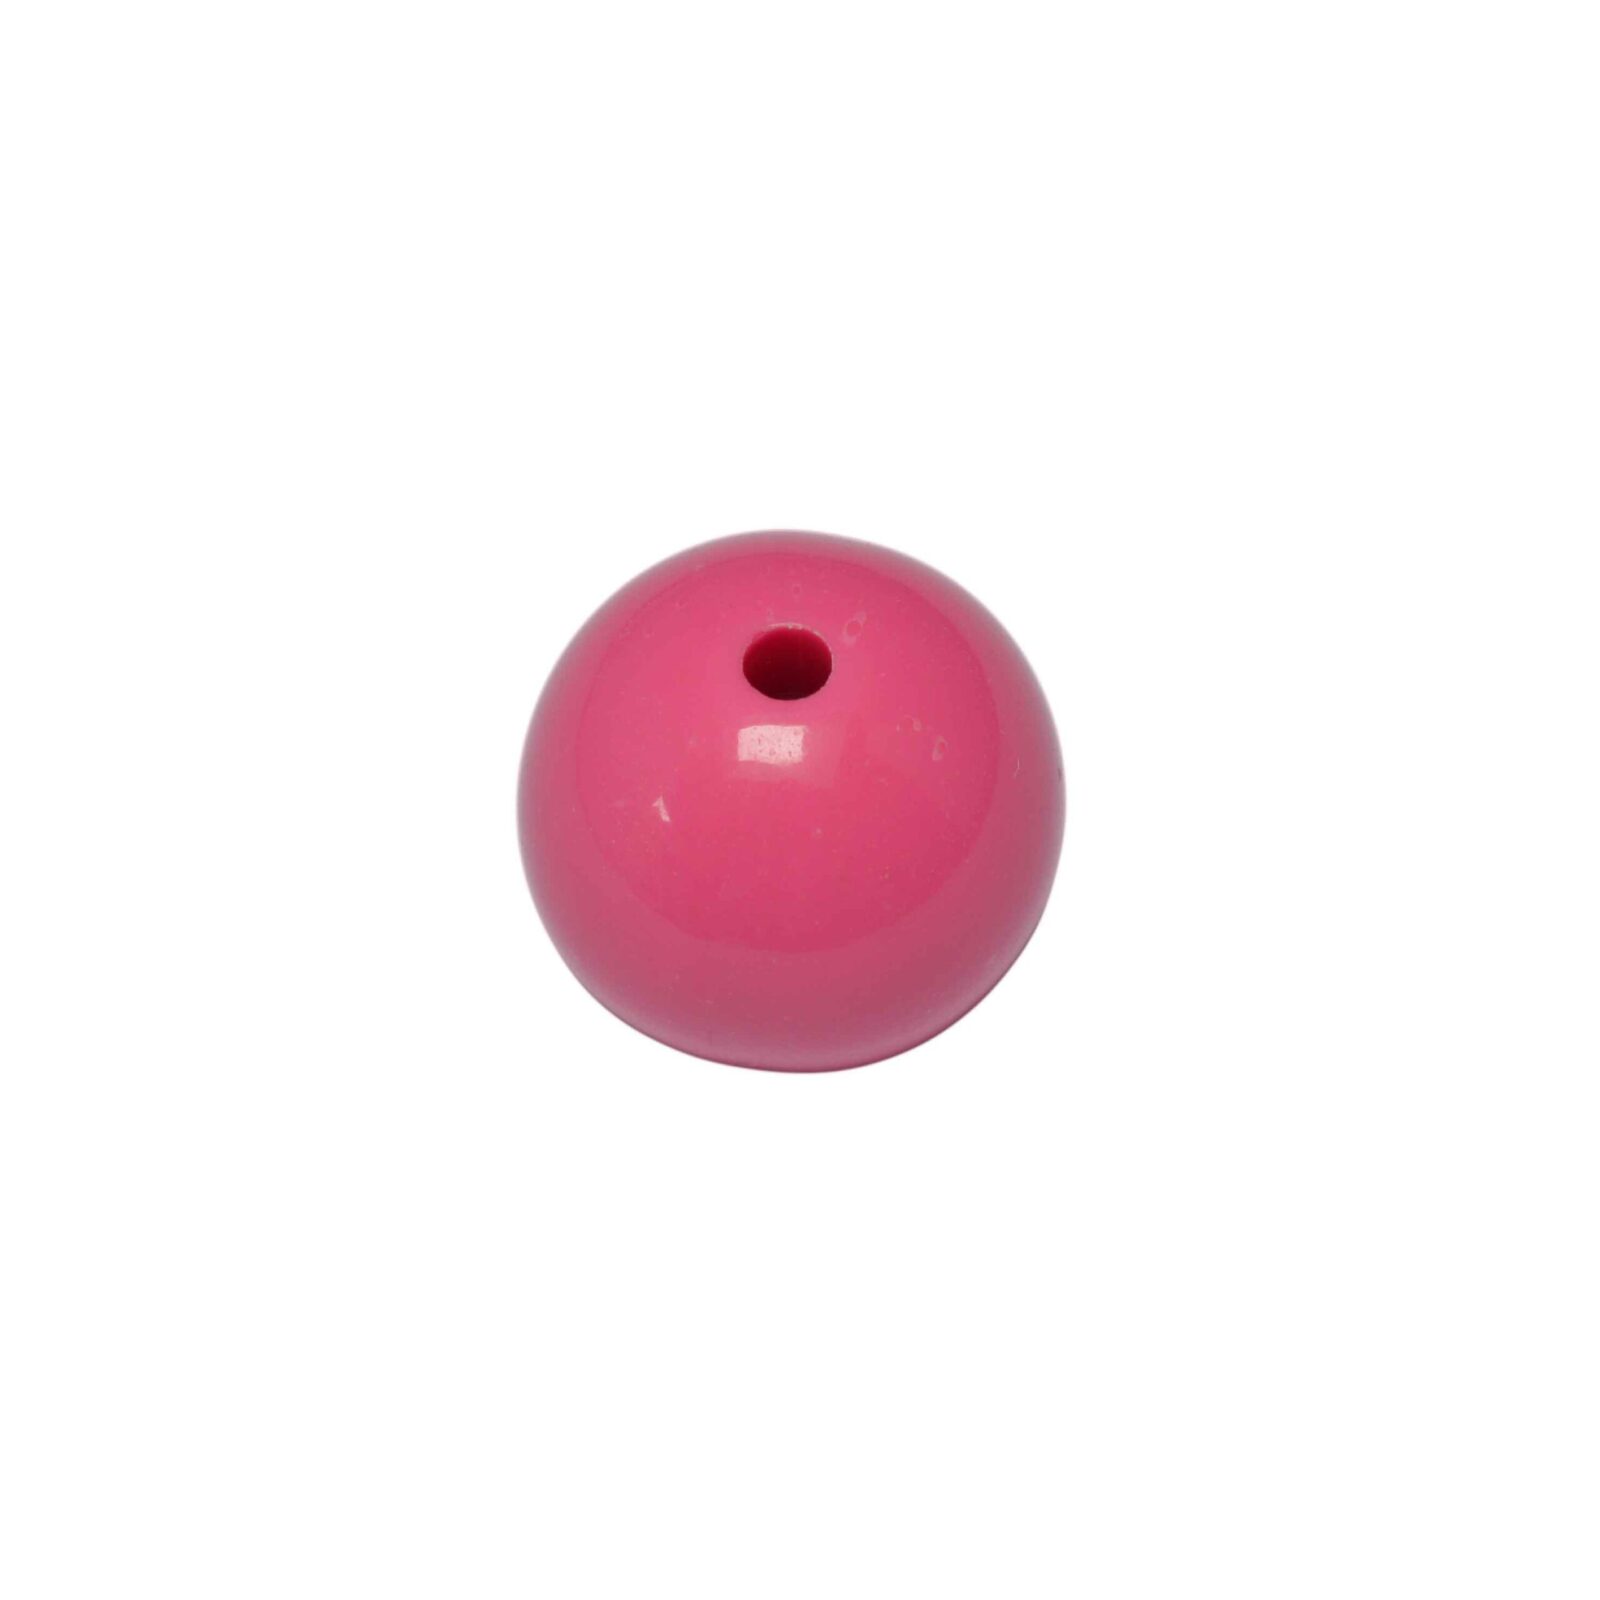 Roze ronde acryl kraal